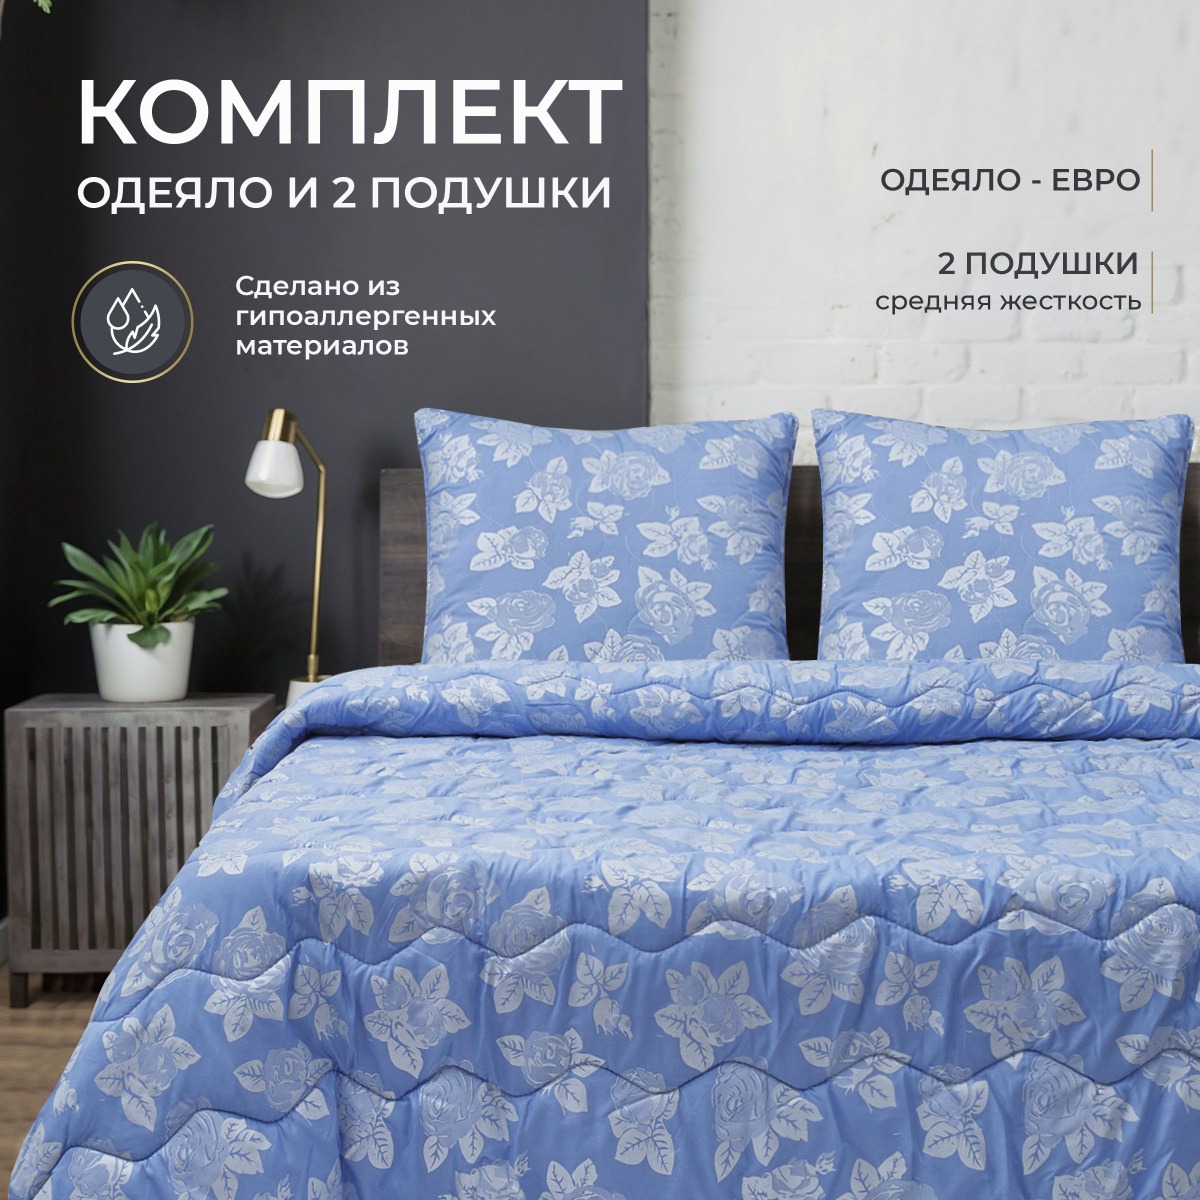 https://www.ozon.ru/seller/komfort-tekstil-1716051/odeyala-15081/?miniapp=seller_1716051